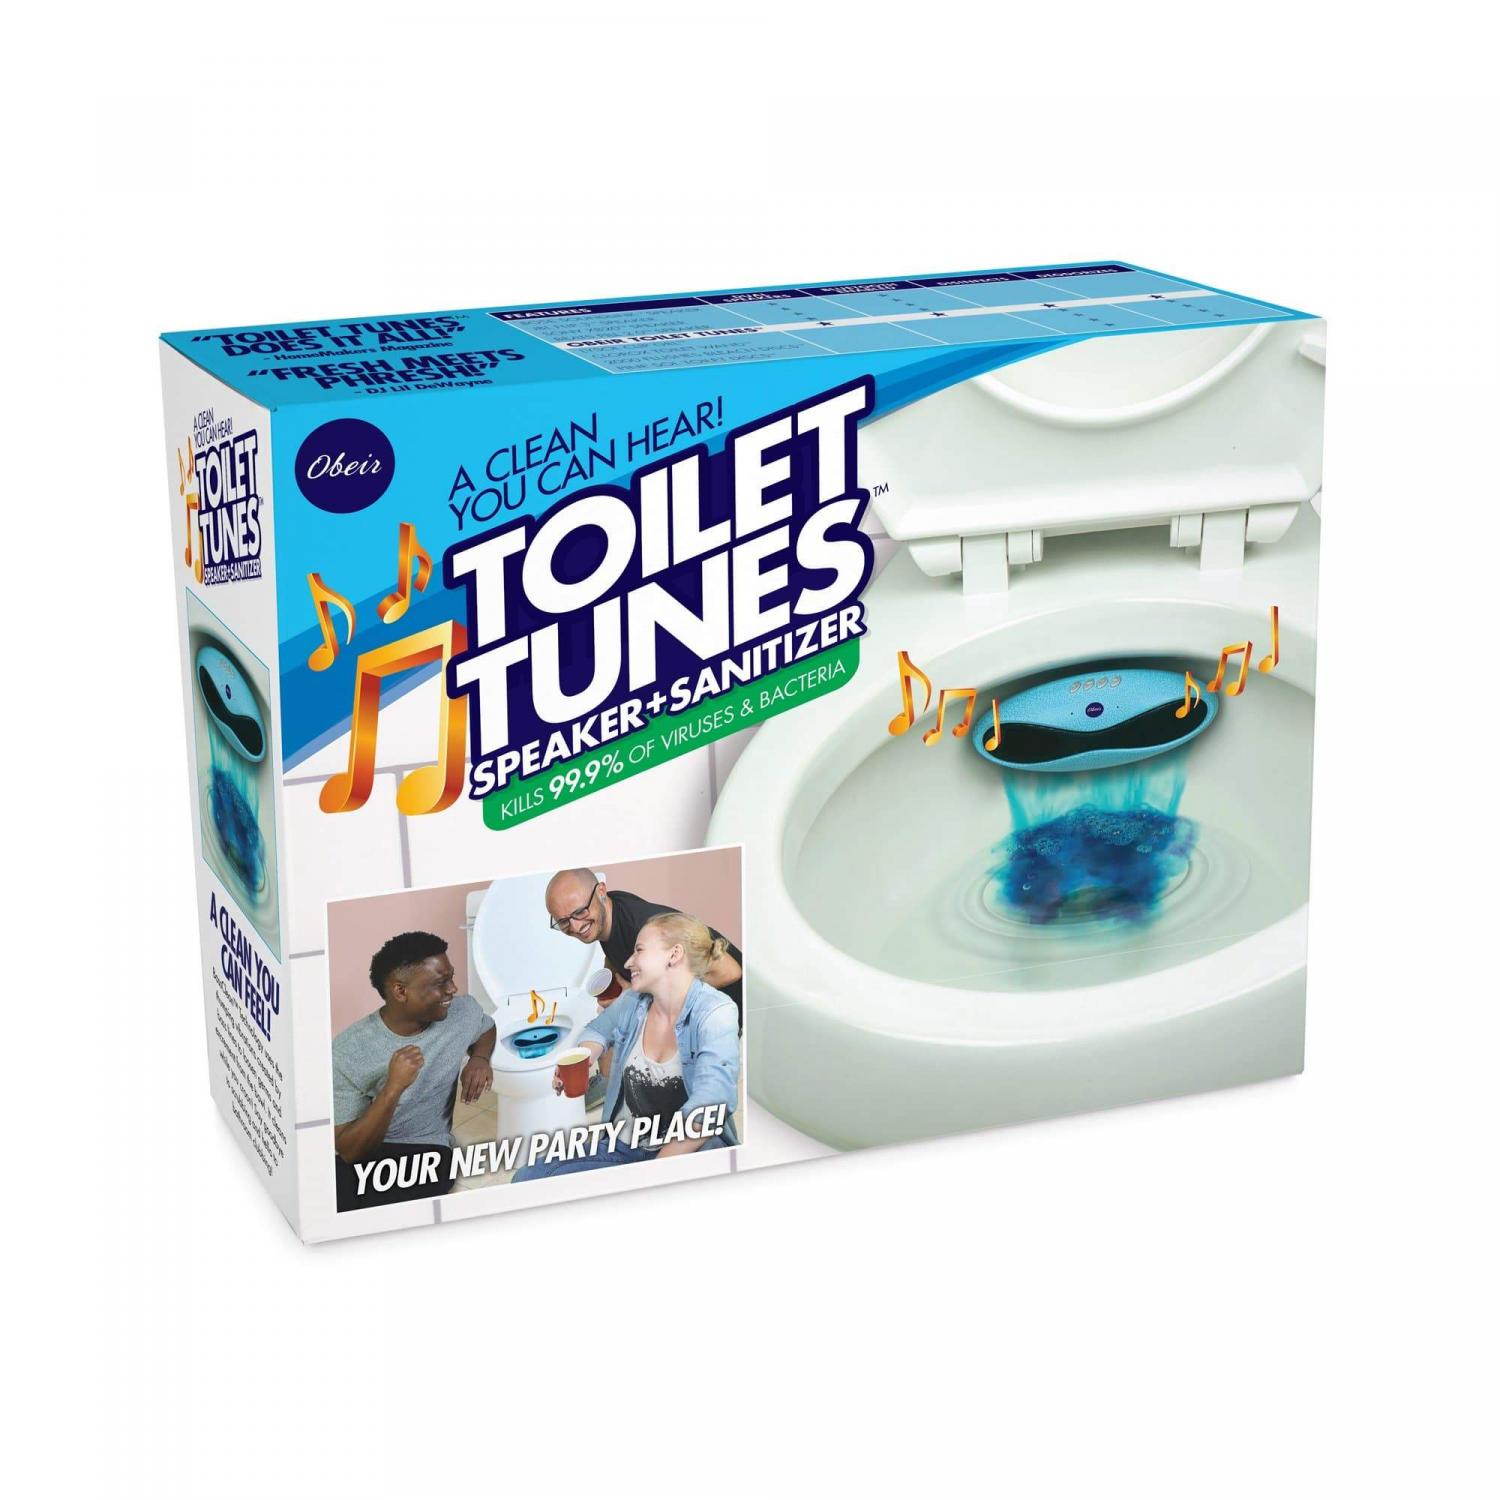 Toilet Tunes Toilet Bluetooth Speaker and Toilet Cleaner Prank Box